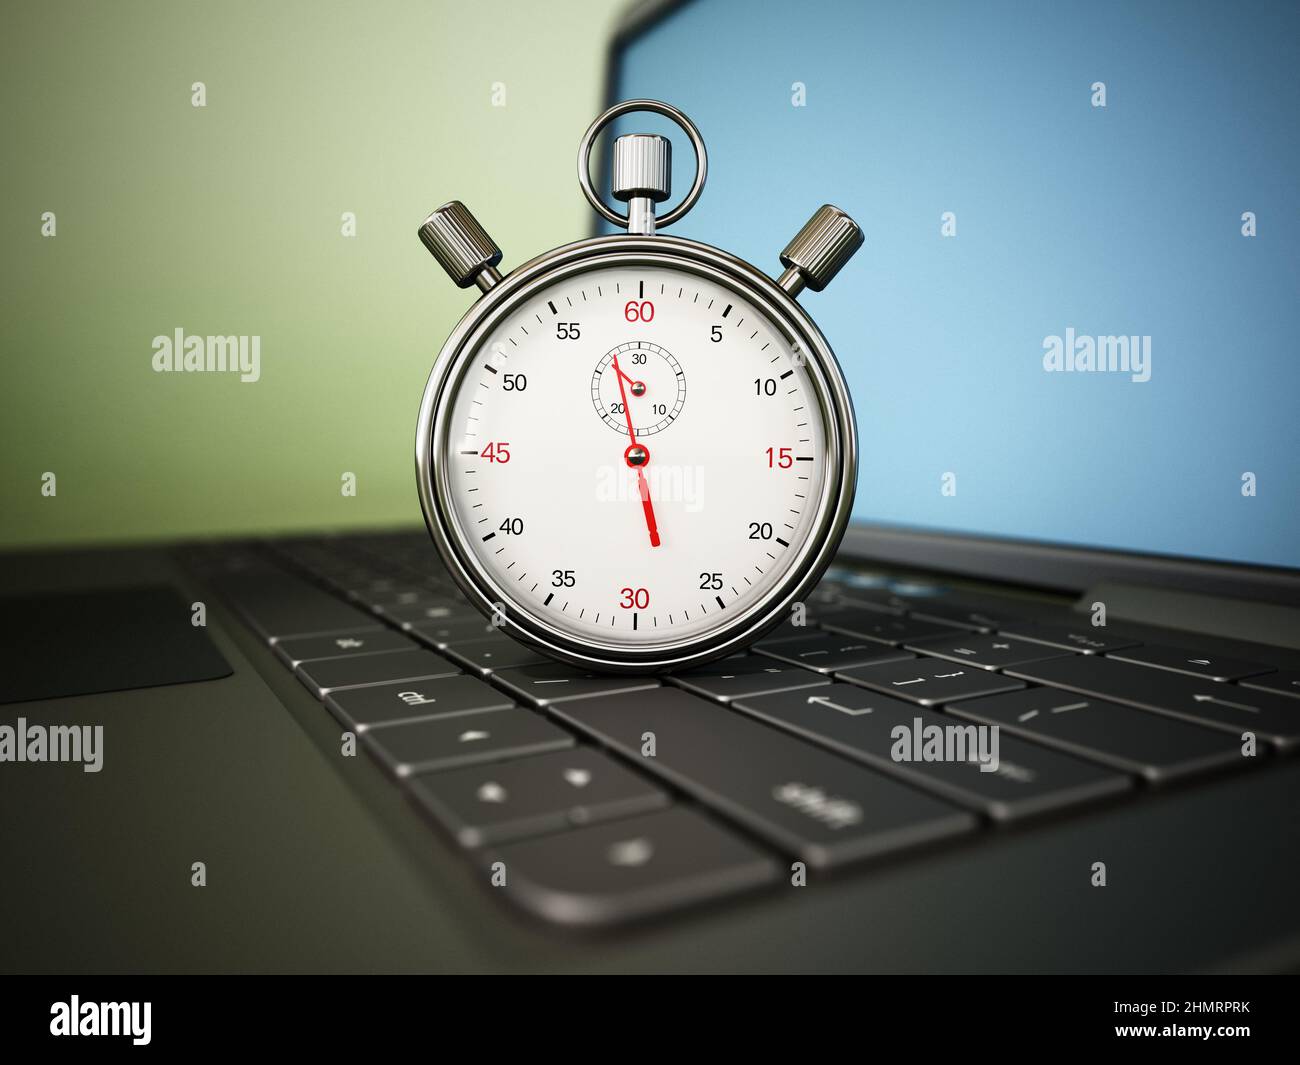 Chronometer standing on laptop keyboard. 3D illustration. Stock Photo